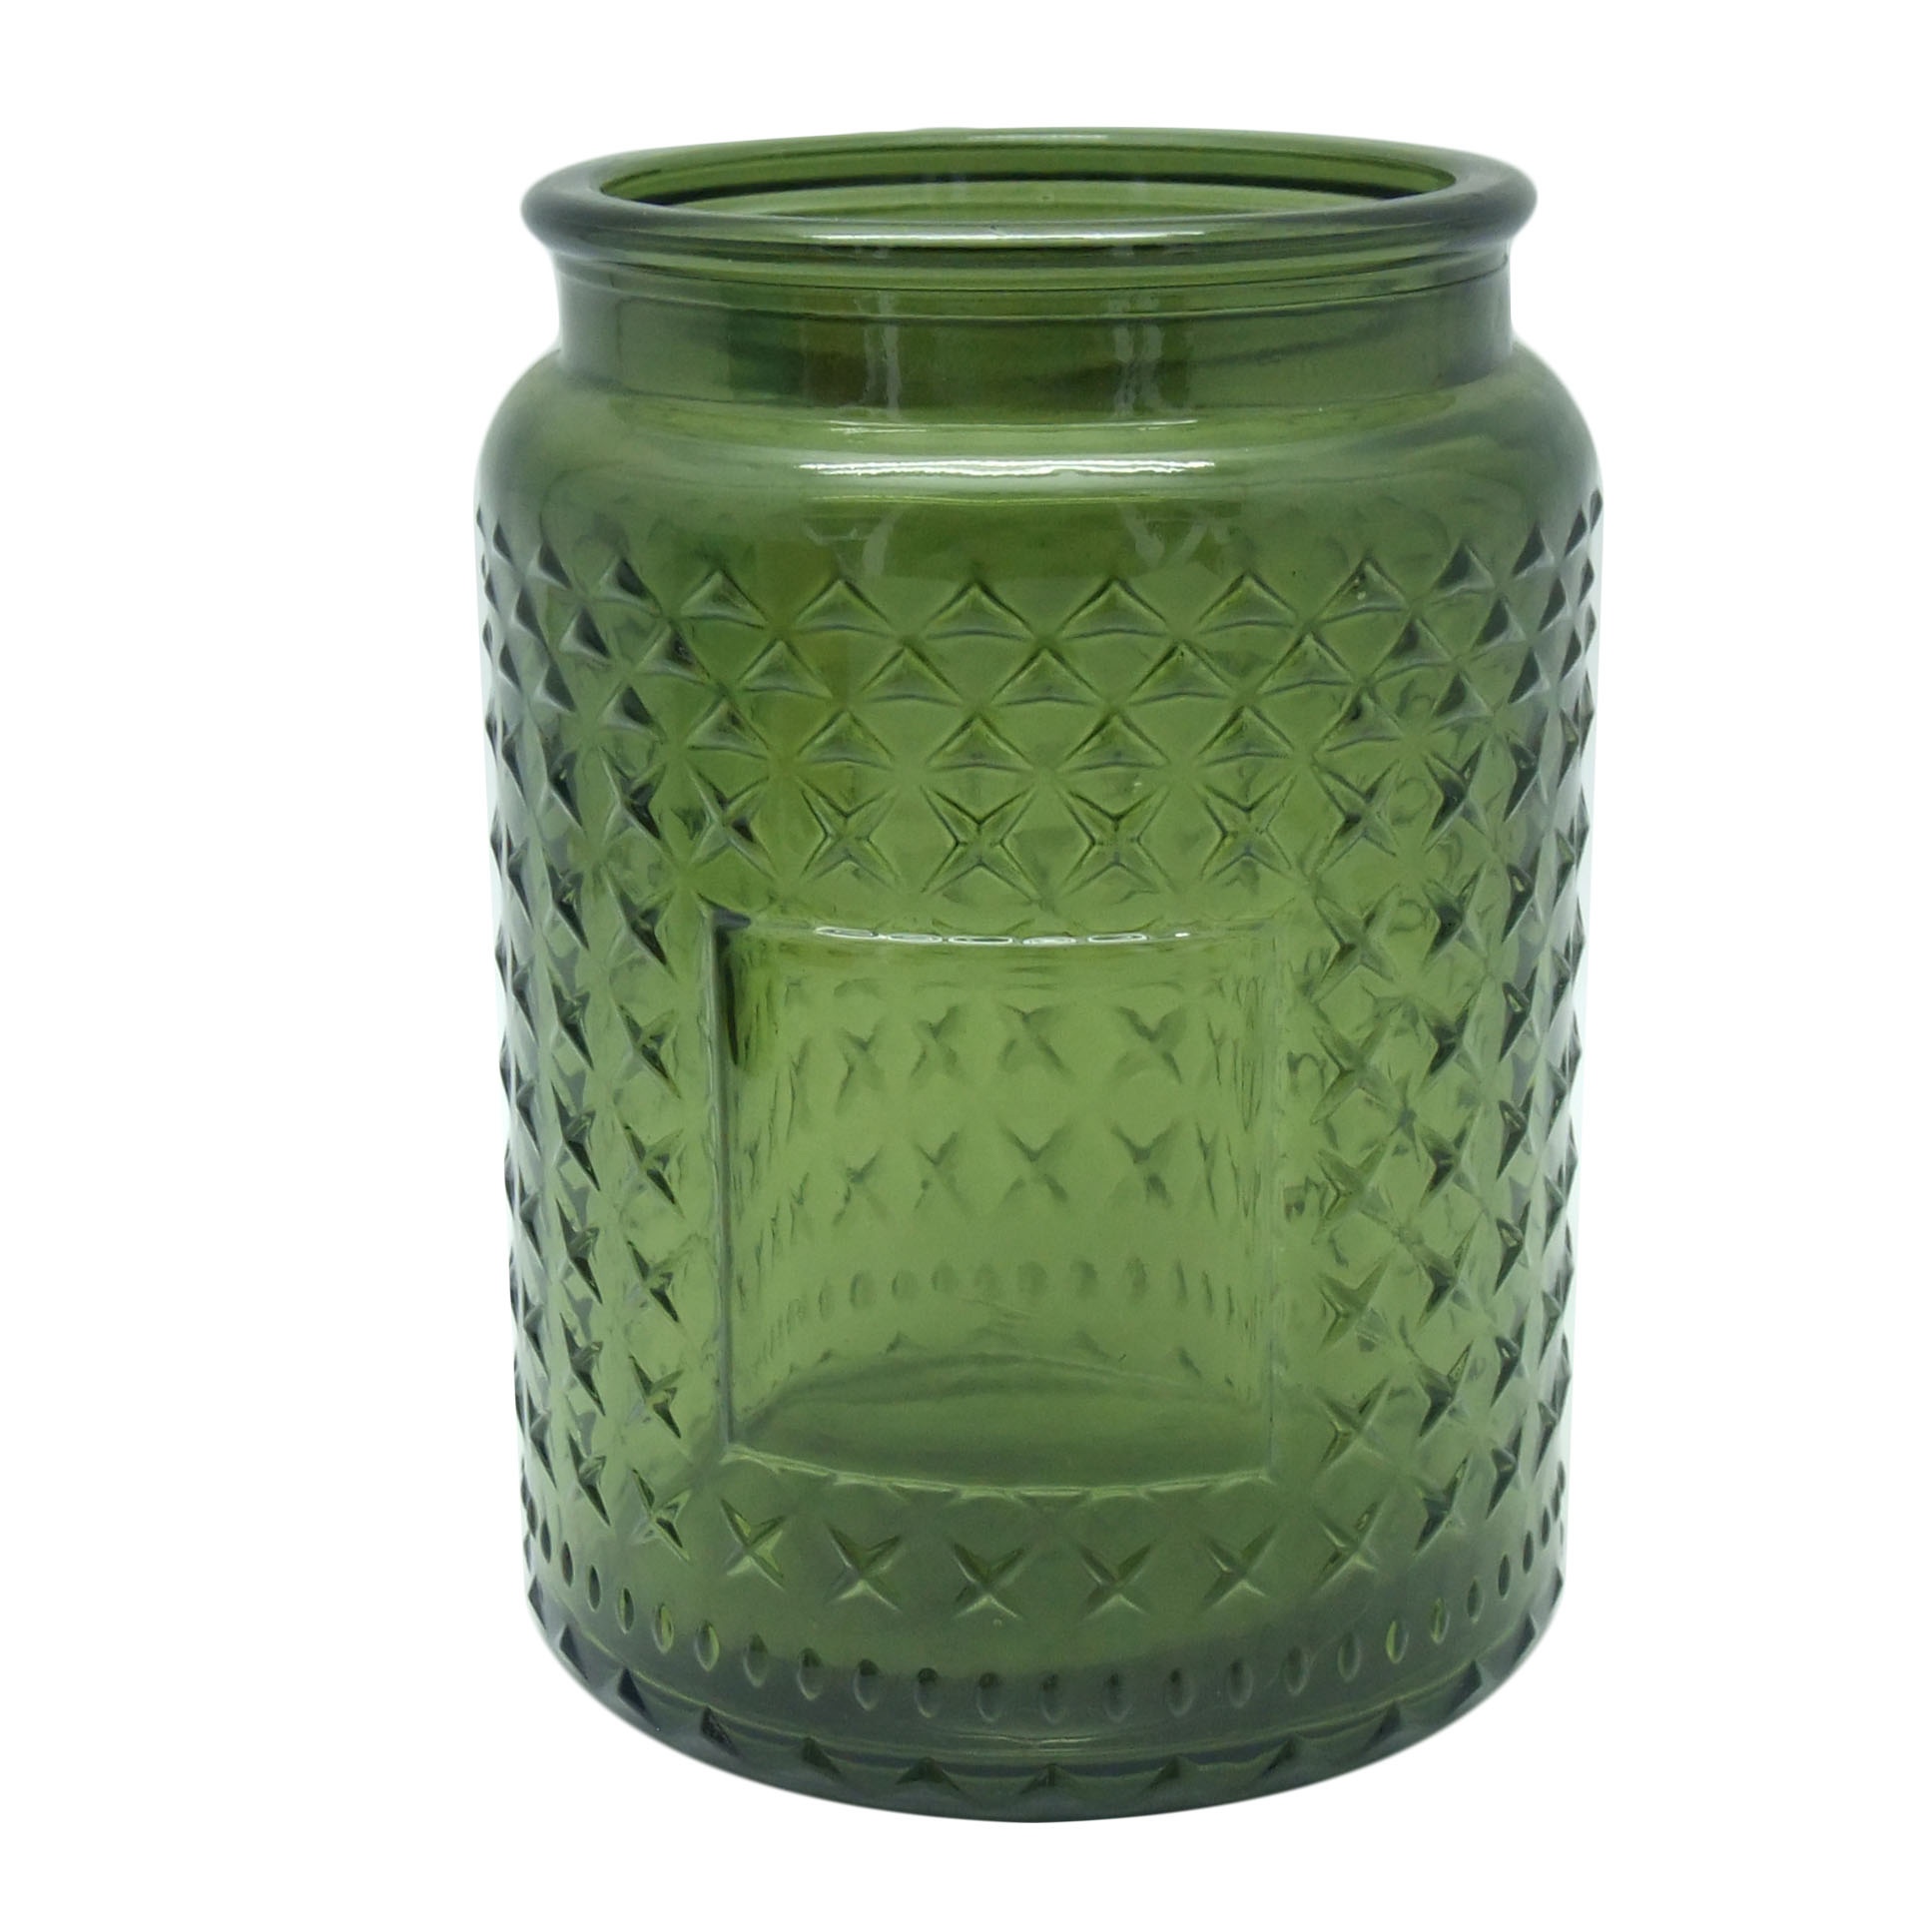 https://colorsglass.com/Uploads/products/2020-03-16/en-large-embossed-glass-jar-candle-17oz-unique--1-.jpg